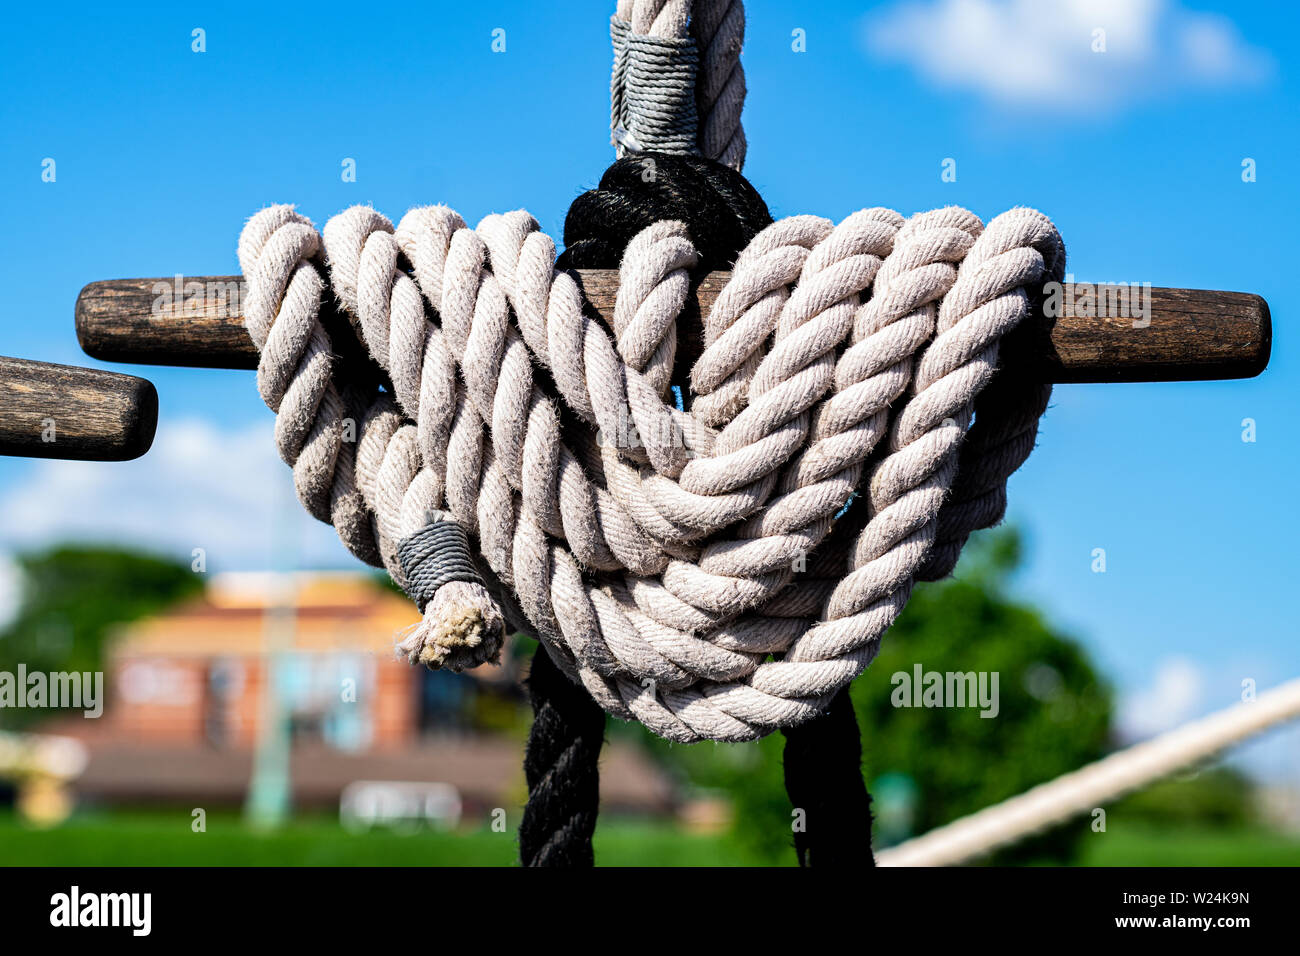 Maritime ropes aboard a sailing ship. Stock Photo